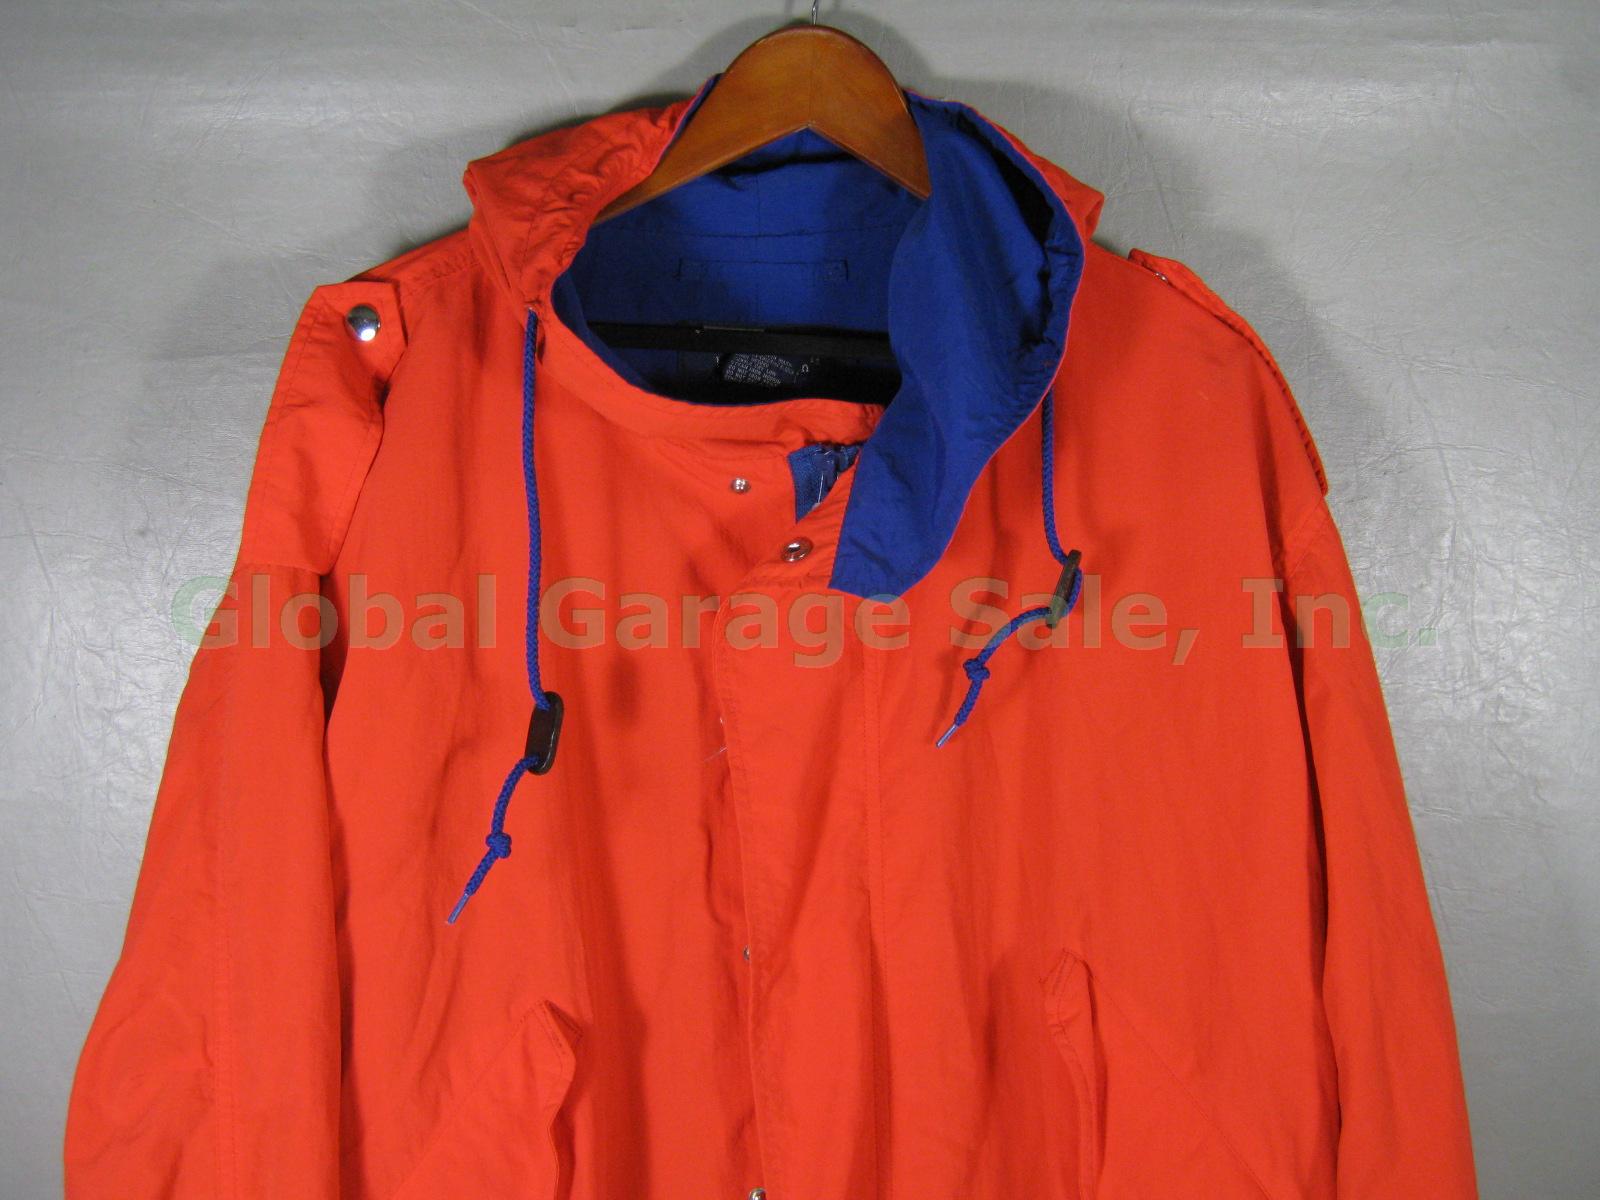 Vintage Polo By Ralph Lauren RL-92 Orange Field Jacket Size Large Never Worn! 1